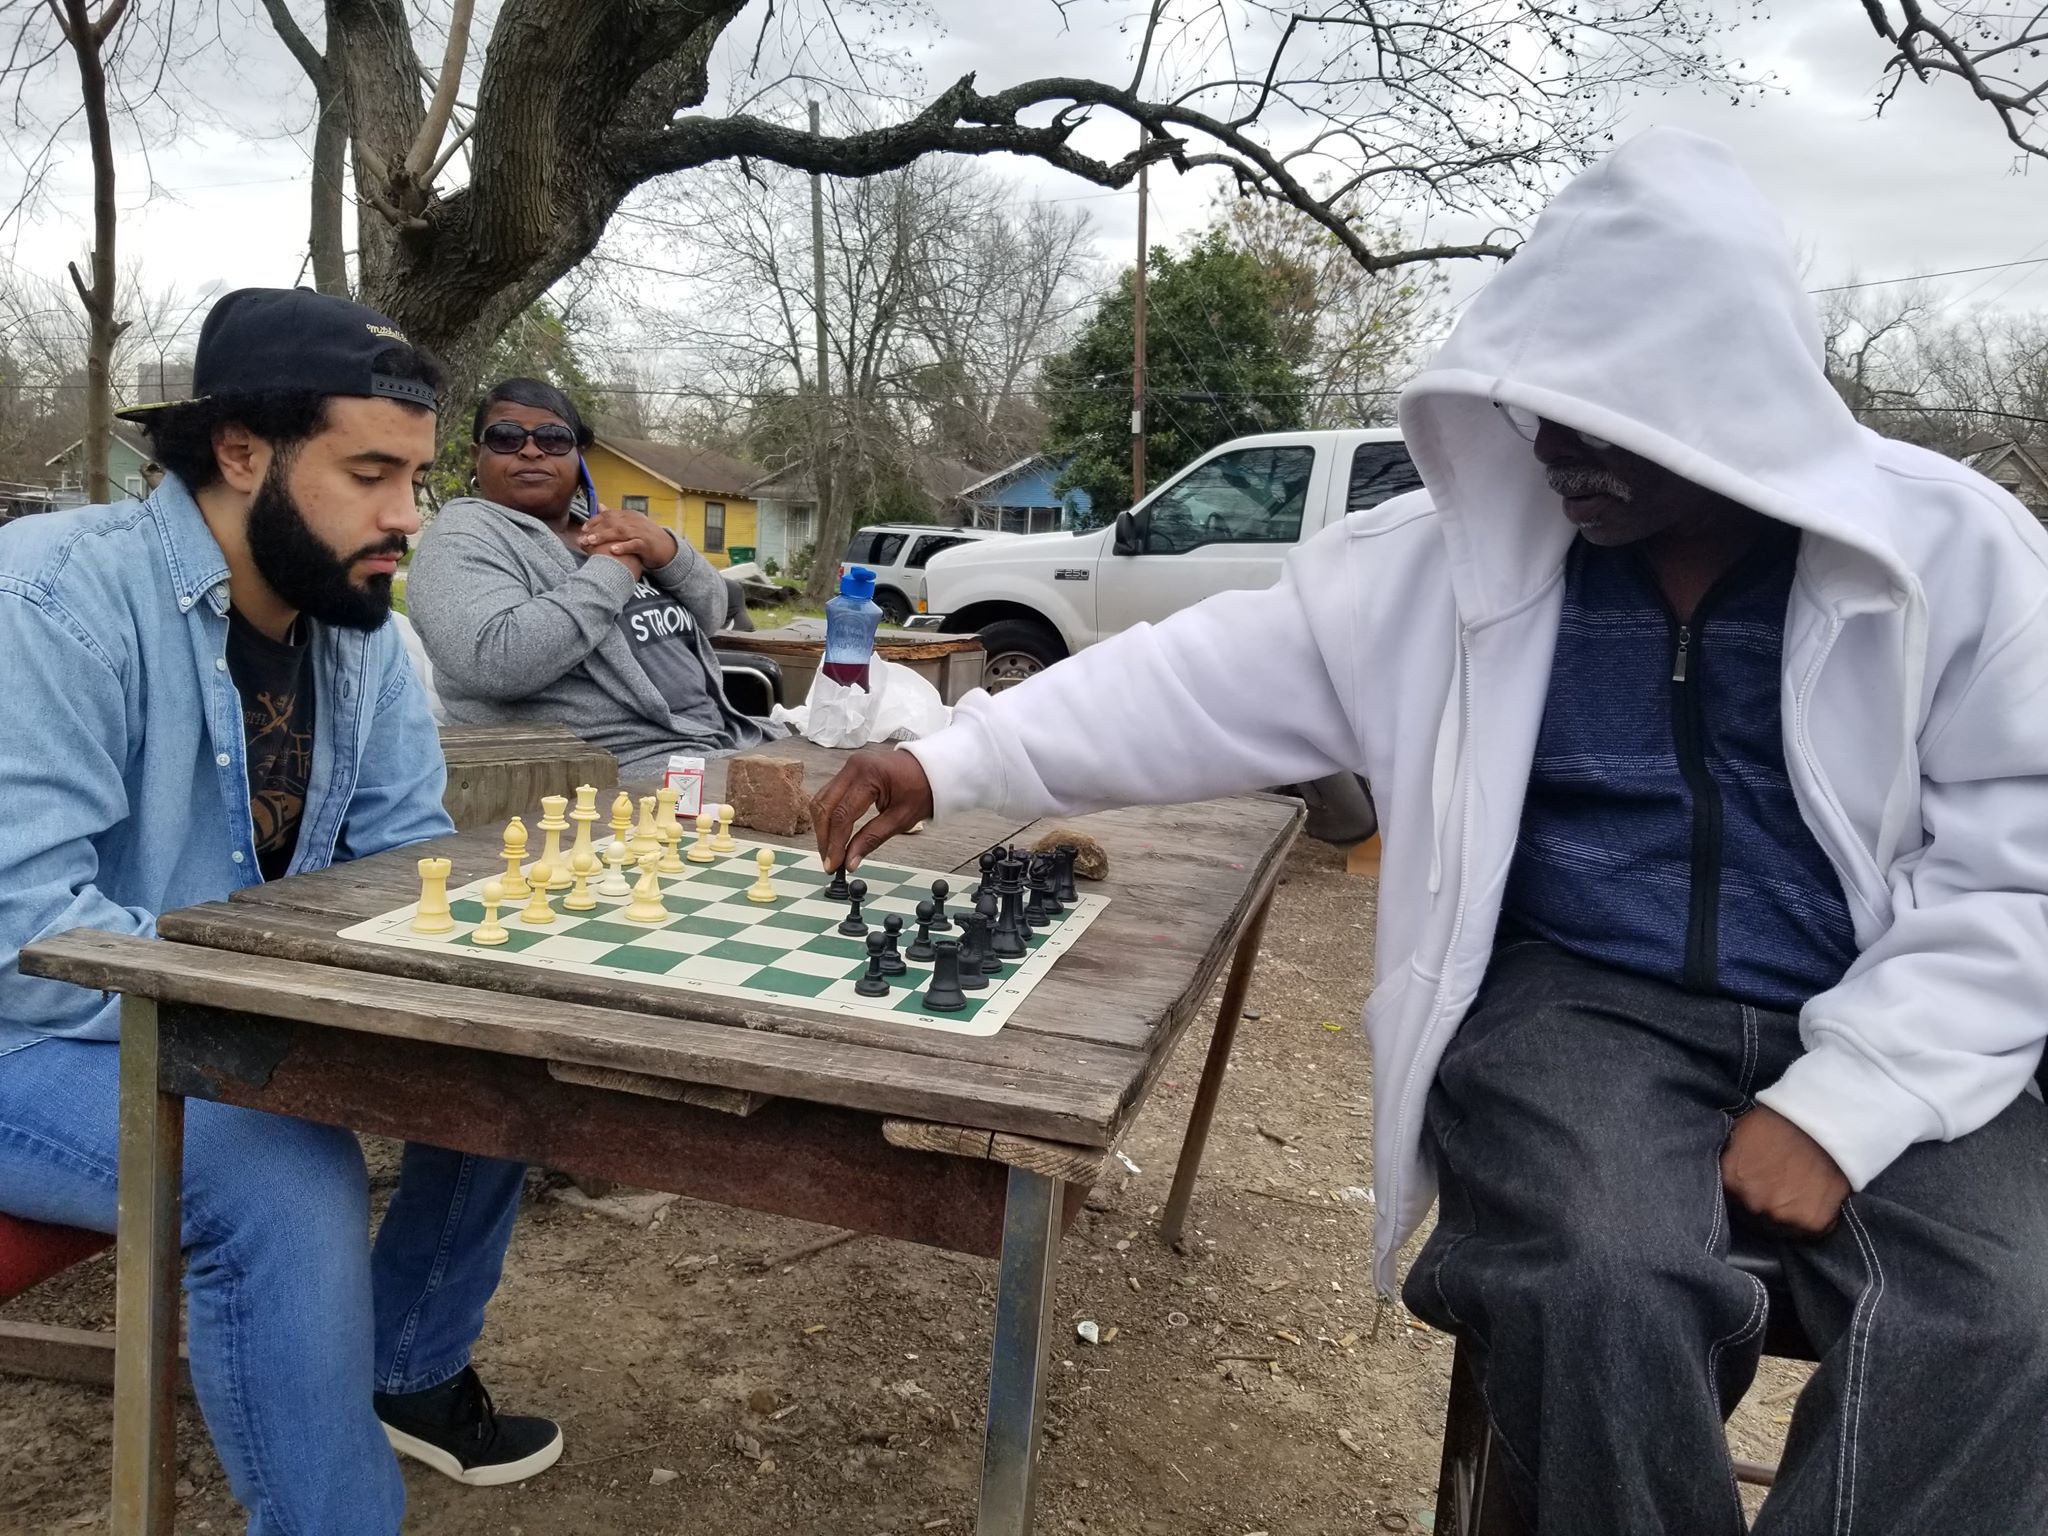 Developer Community - Chess Club 